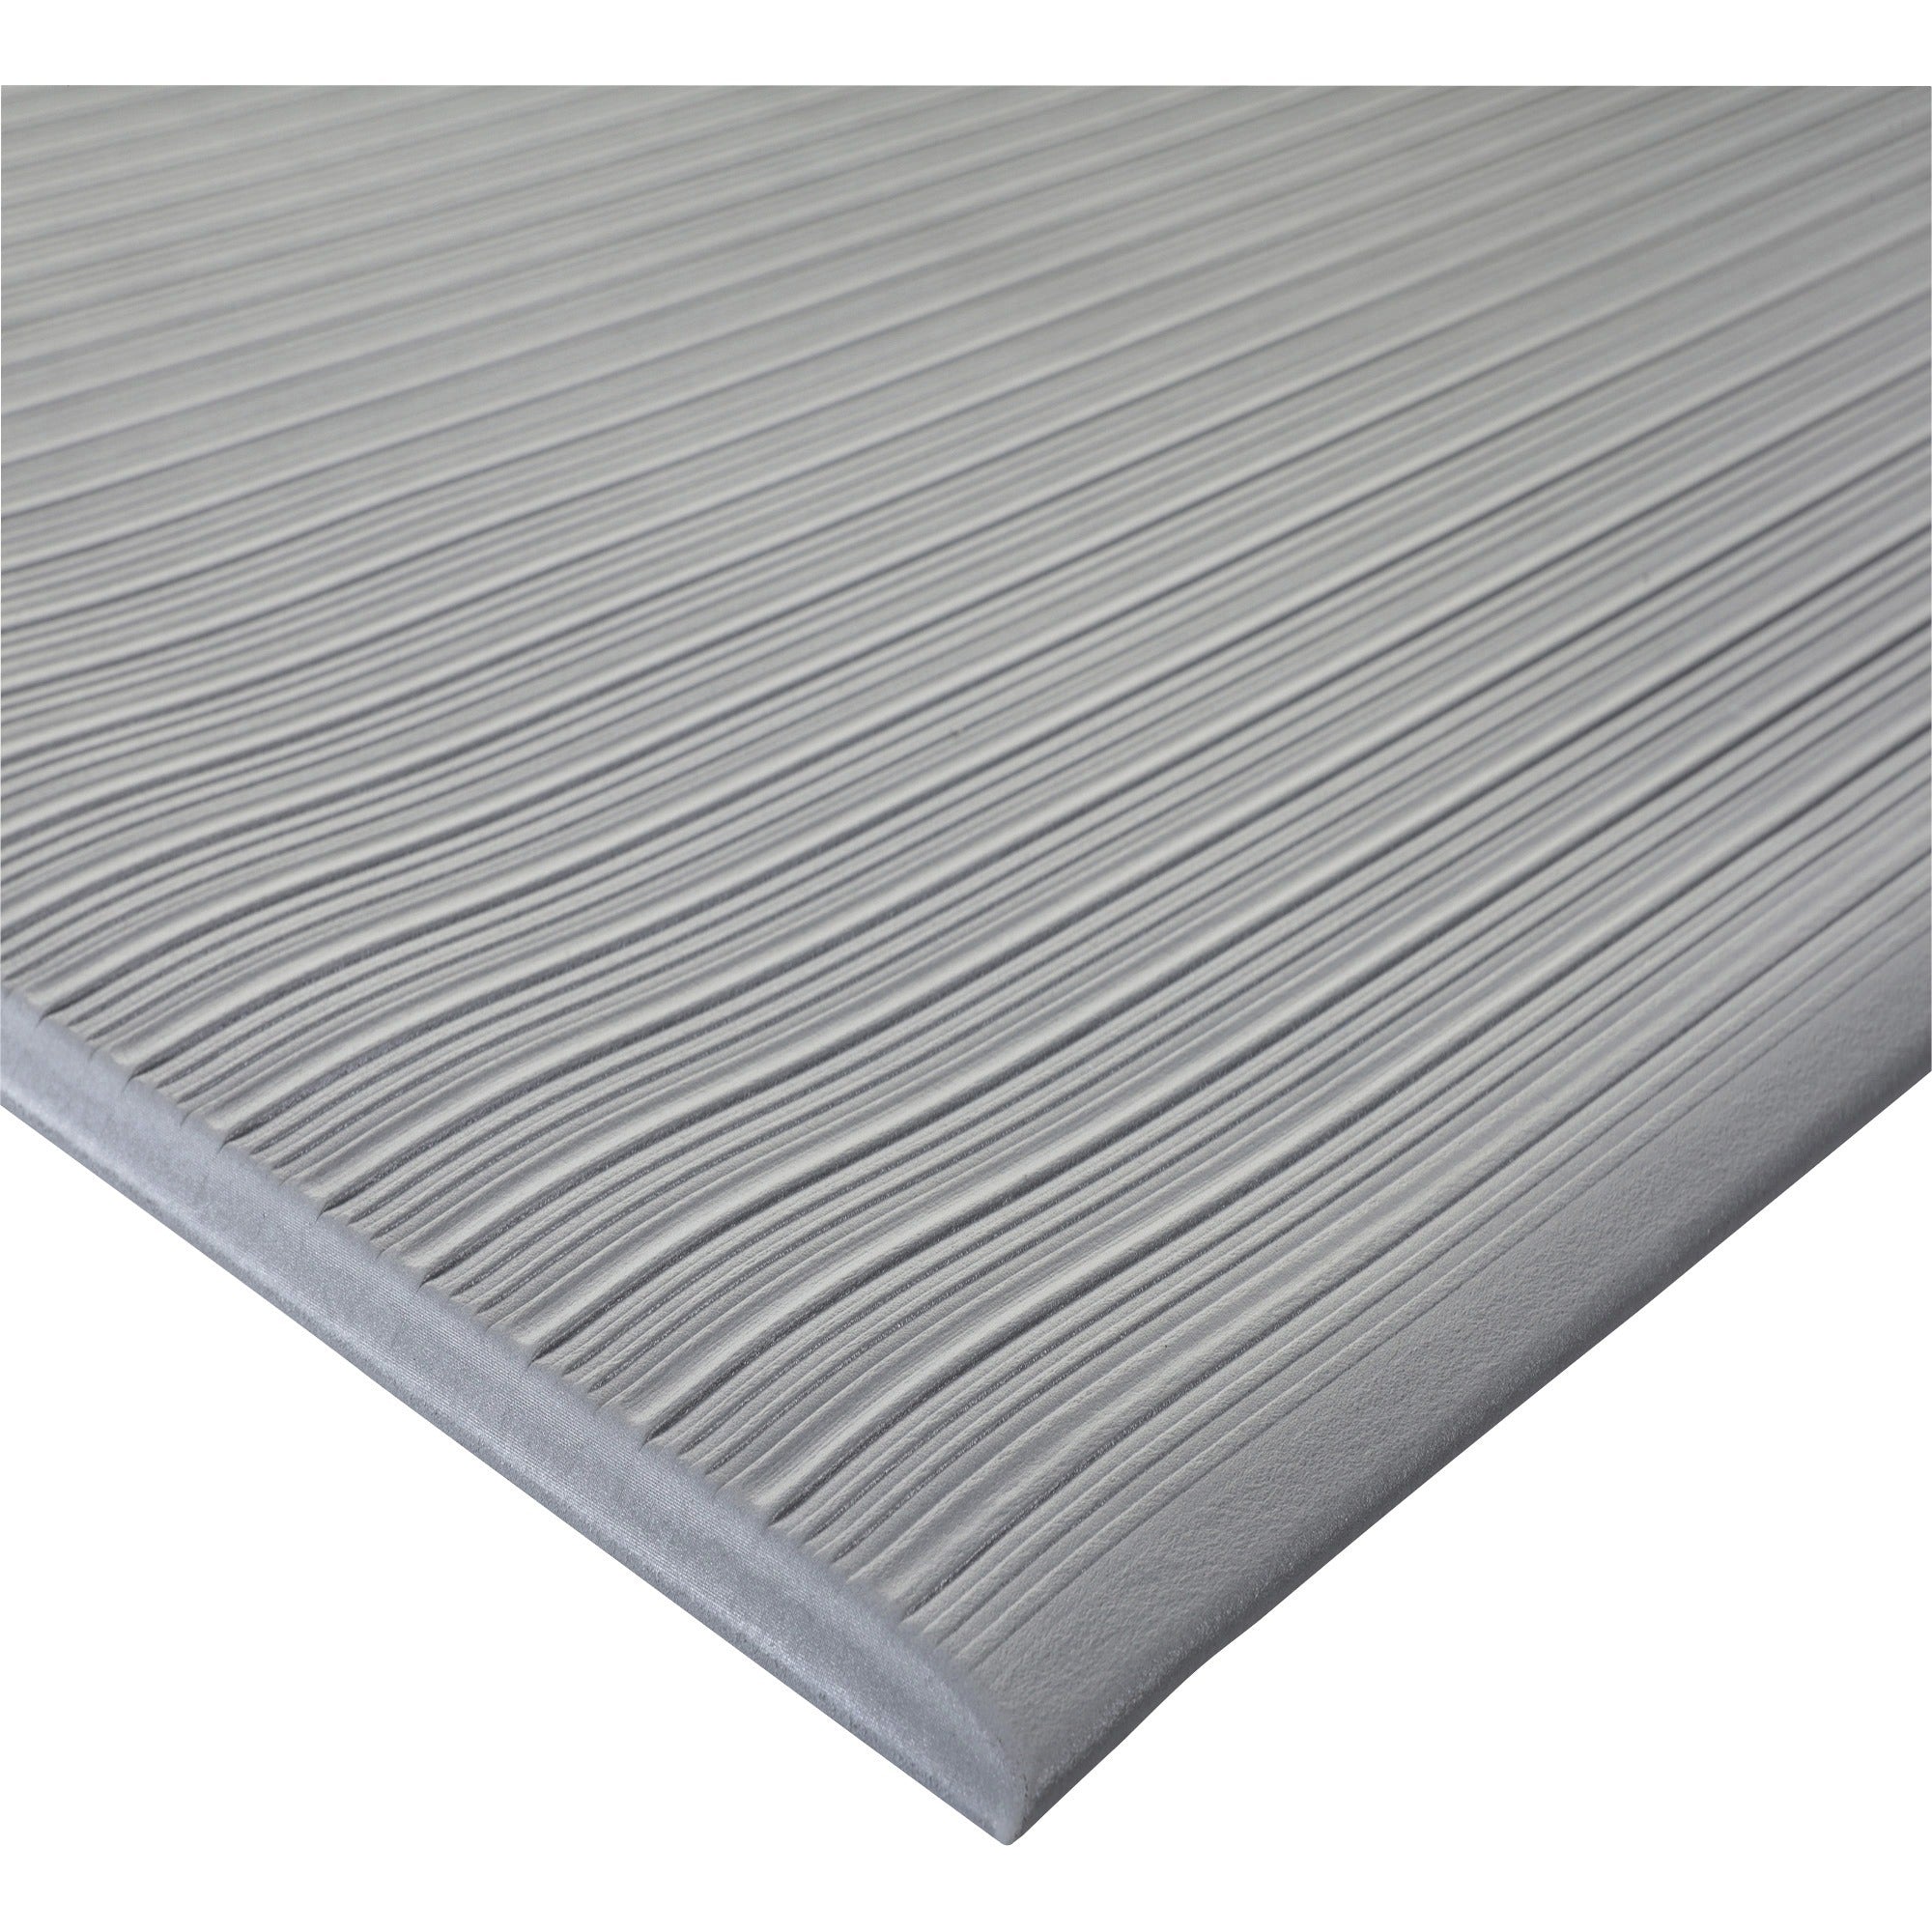 genuine-joe-air-step-mat-exercise-60-length-x-36-width-x-0375-thickness-rectangular-vinyl-foam-gray-1each_gjo00086 - 1